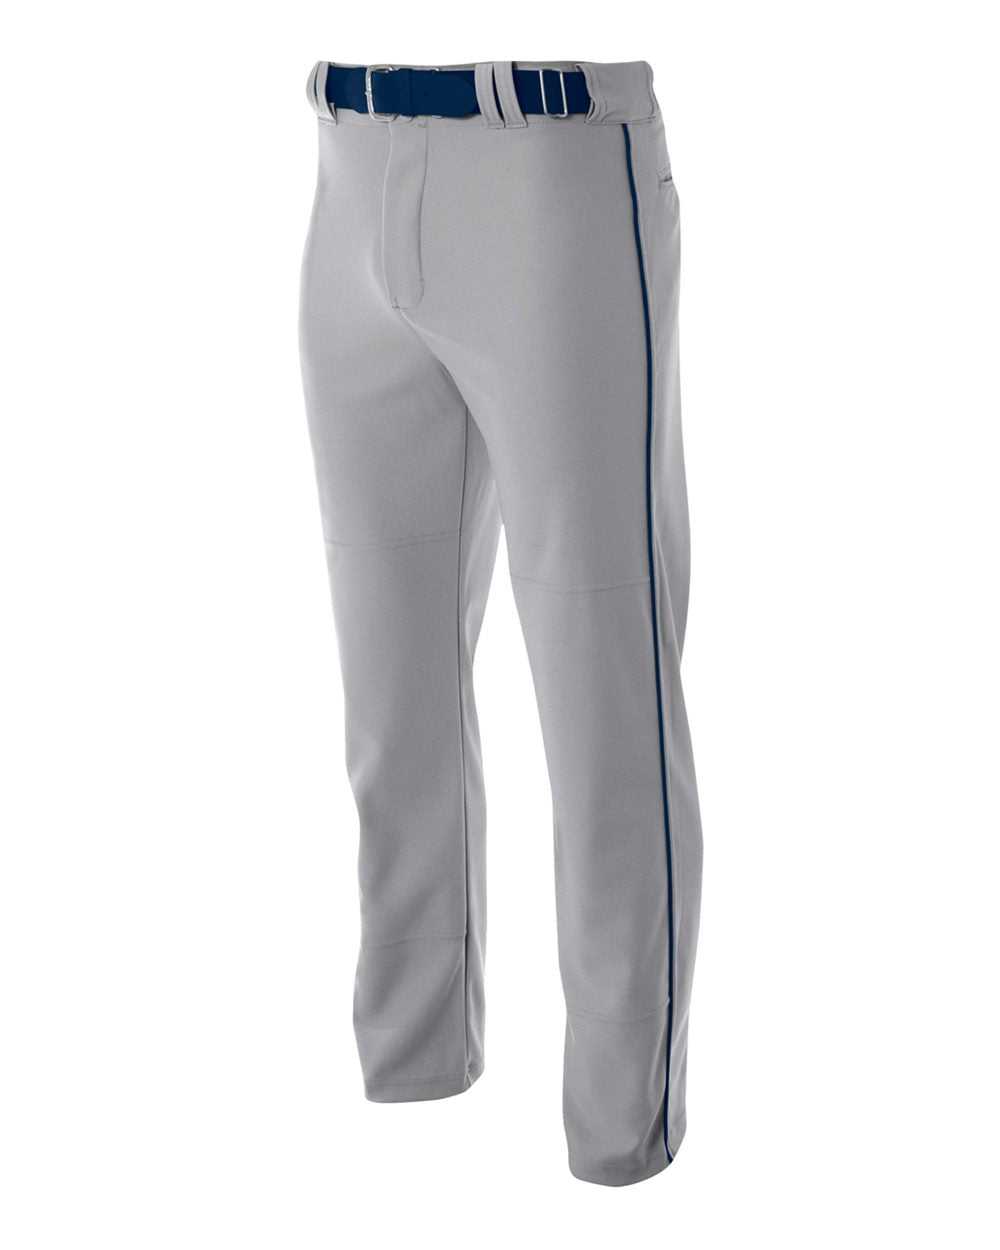 A4 N6162 Pro Style Open Bottom Baggy Cut Baseball Pant - Gray Navy - HIT a Double